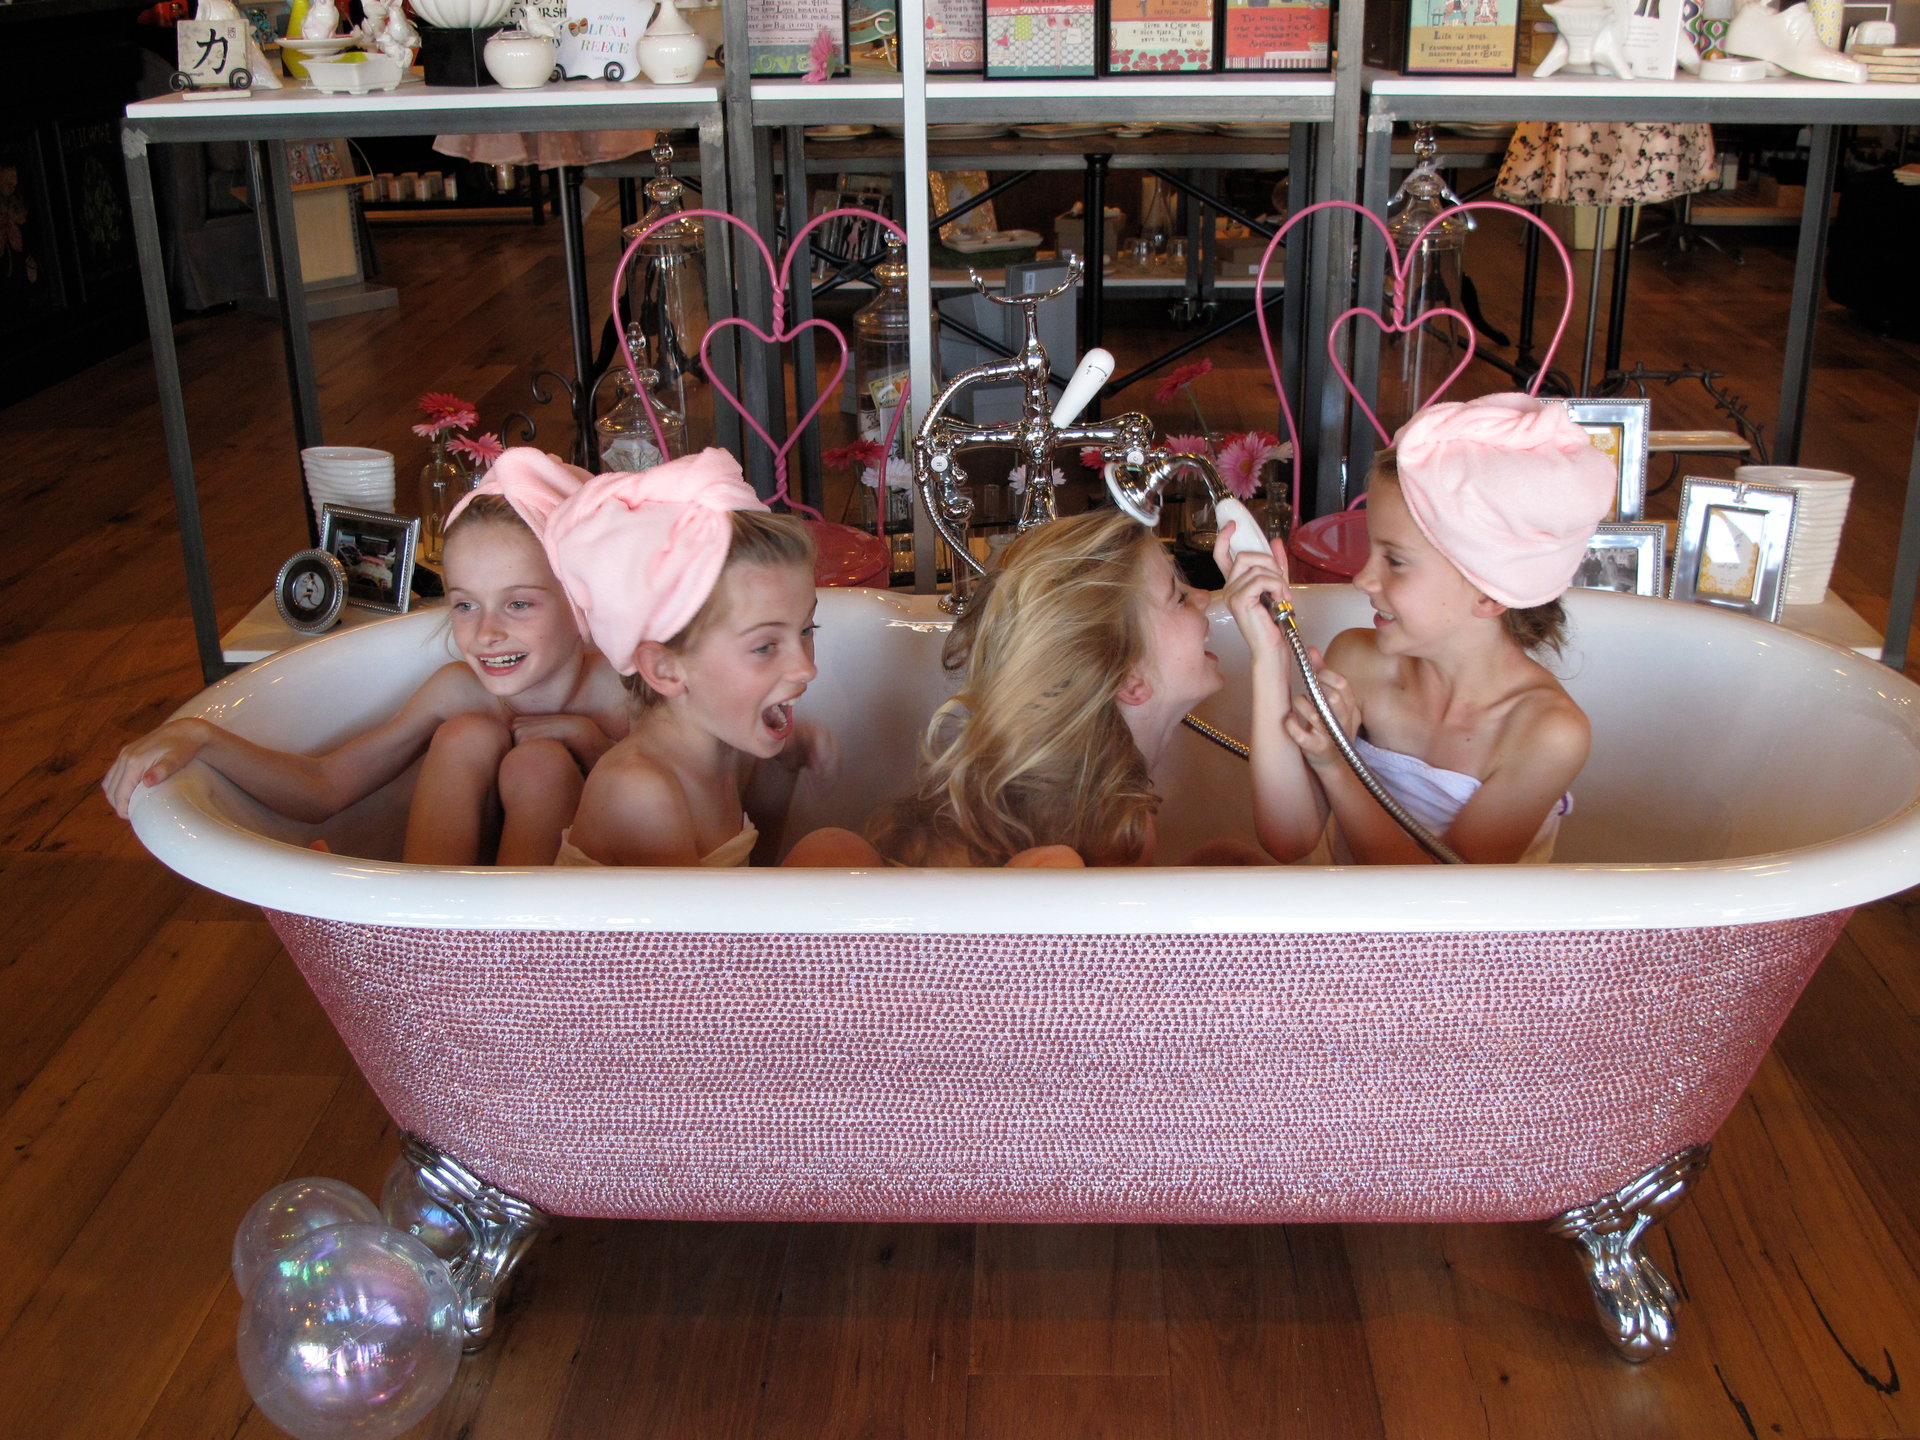 Kelly Rowland bought Blue Ivy a $5,200 Swarovski-crystal-studded baby bathtub.